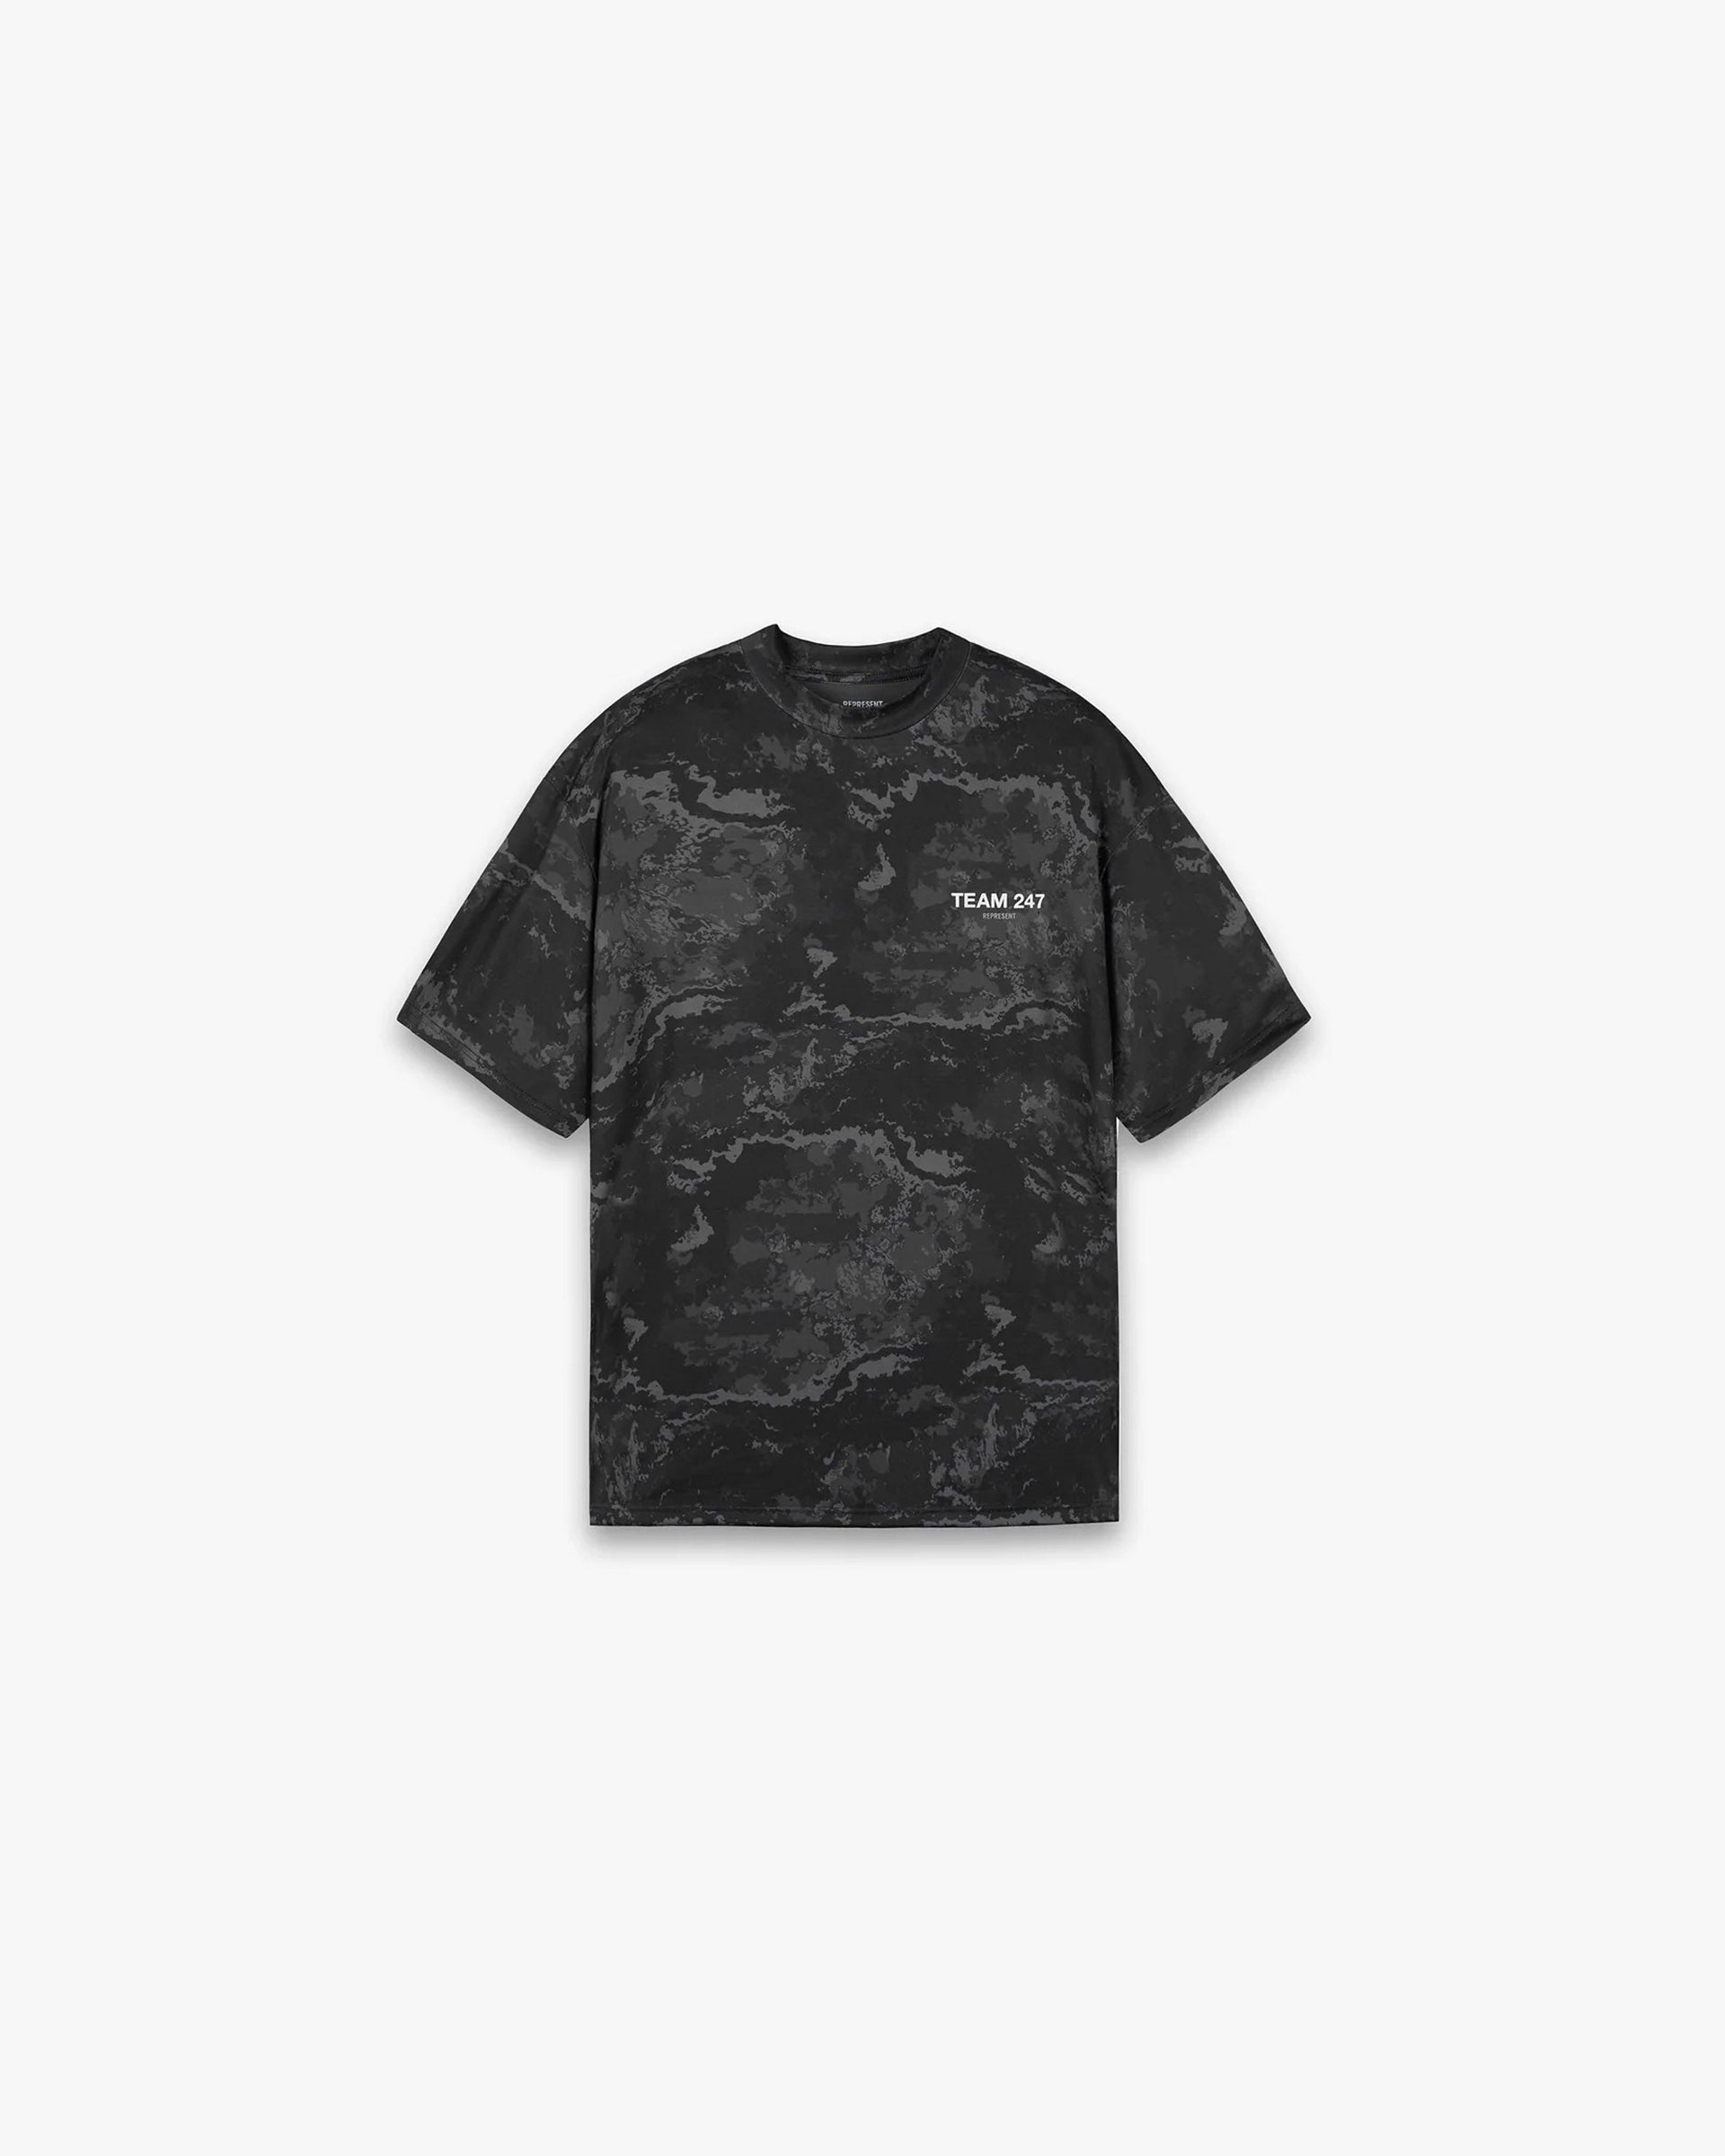 Team 247 Oversized T-Shirt | Black Camo T-Shirts 247 | Represent Clo